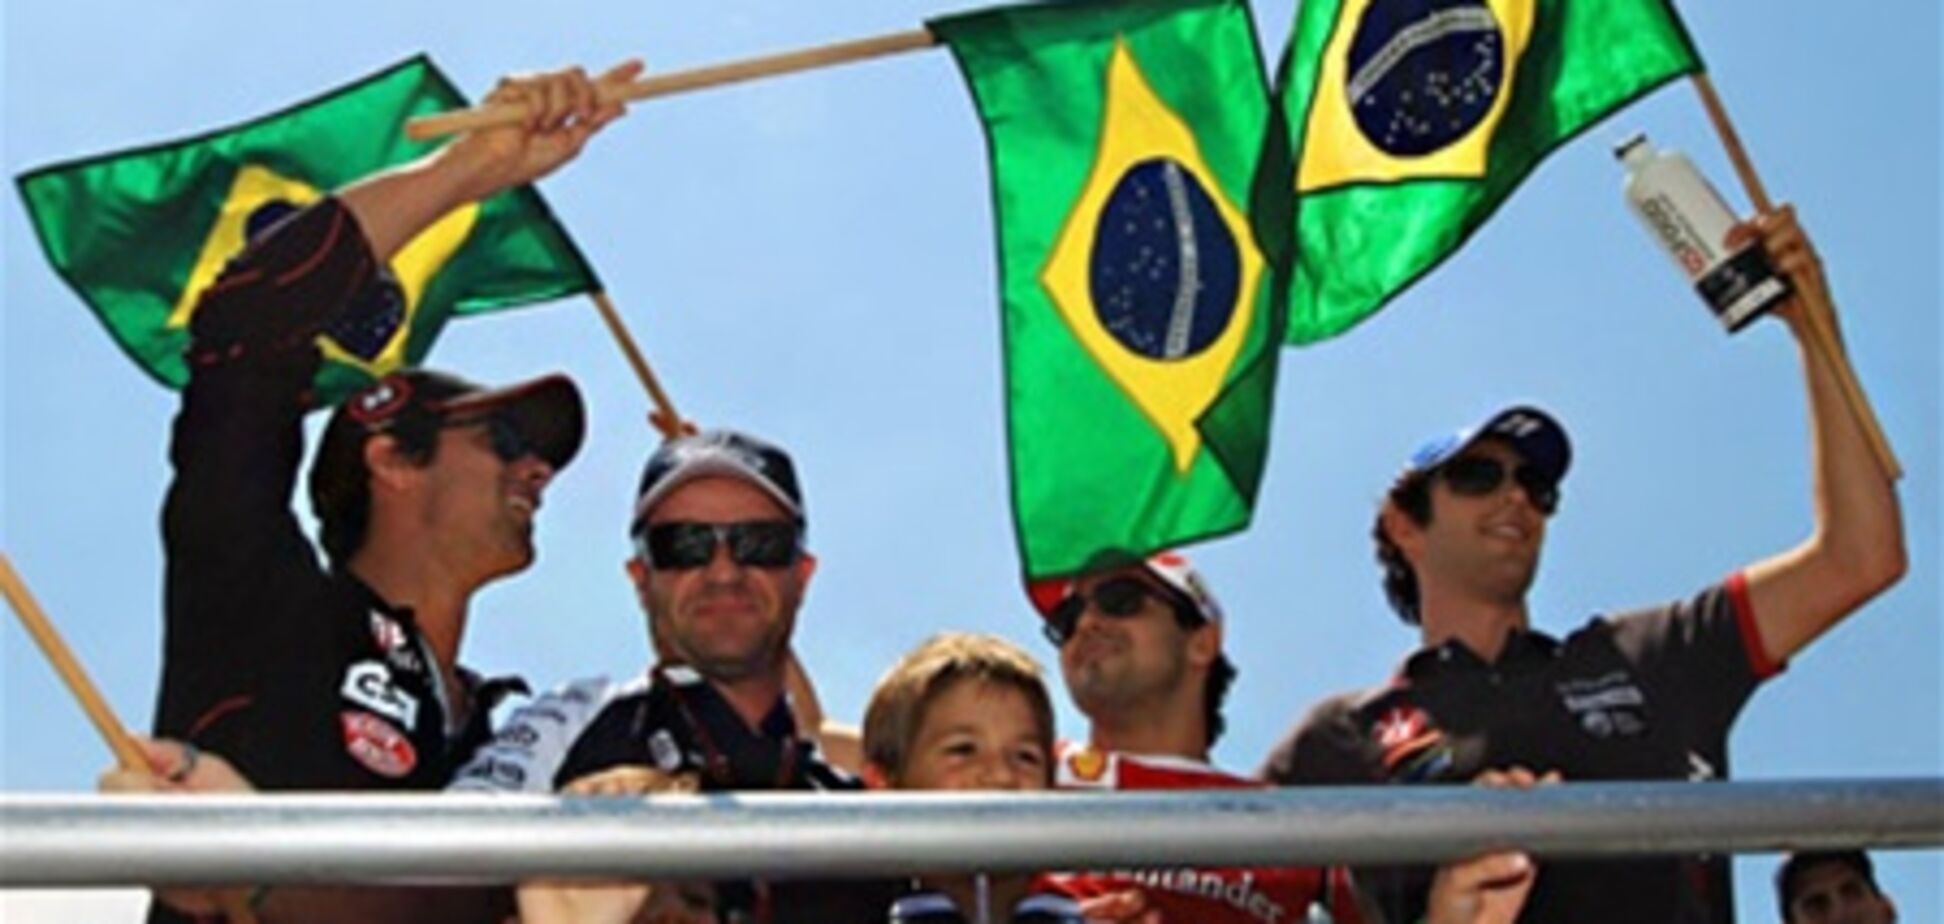 Формула-1. Гран-при Бразилии: гид по этапу